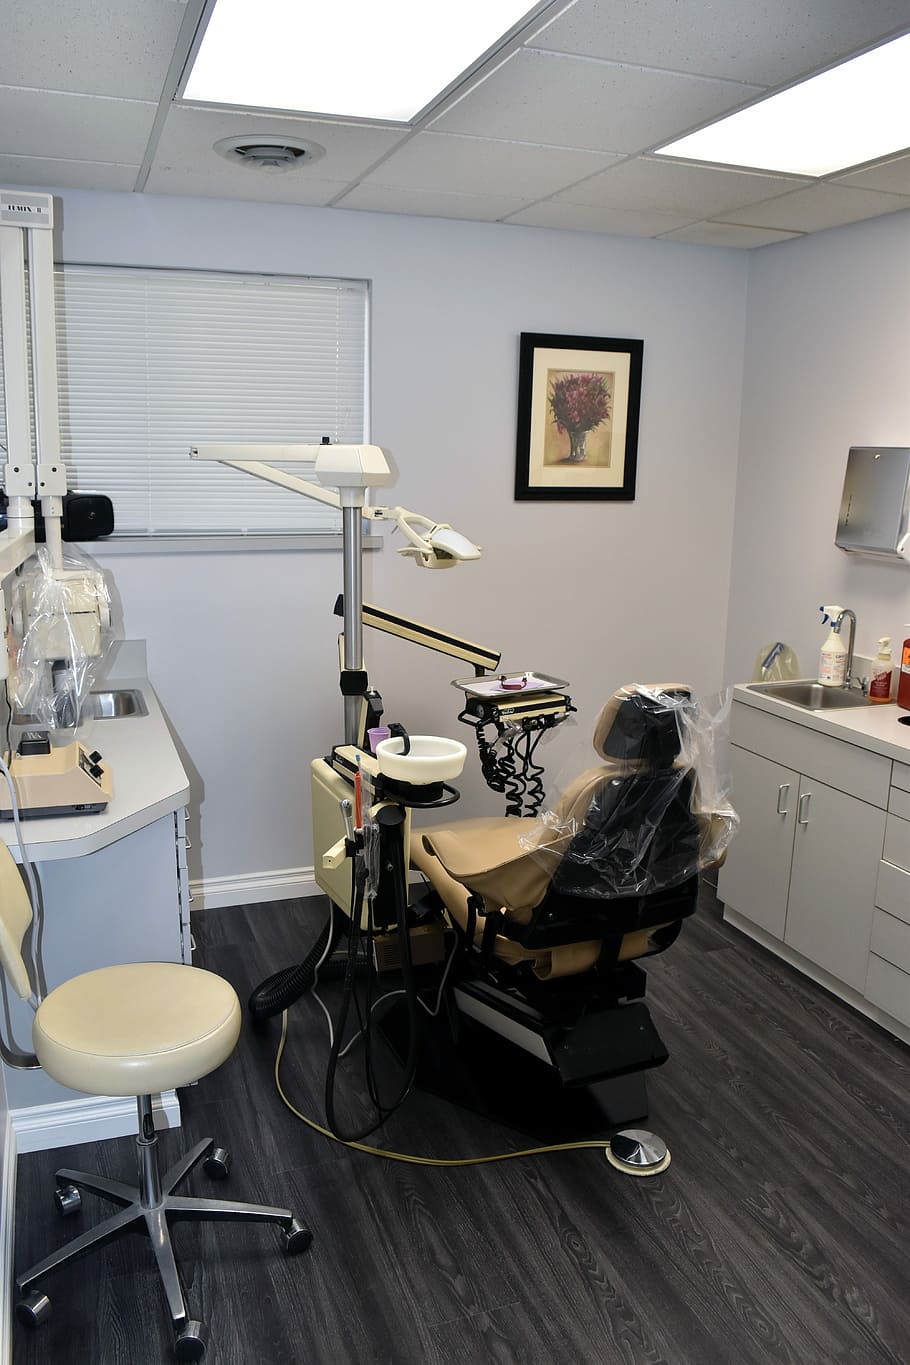 空の歯科医の椅子, 歯科医, オフィス, 試験, 部屋, 歯科, 衛生, 医療, 健康, 設備